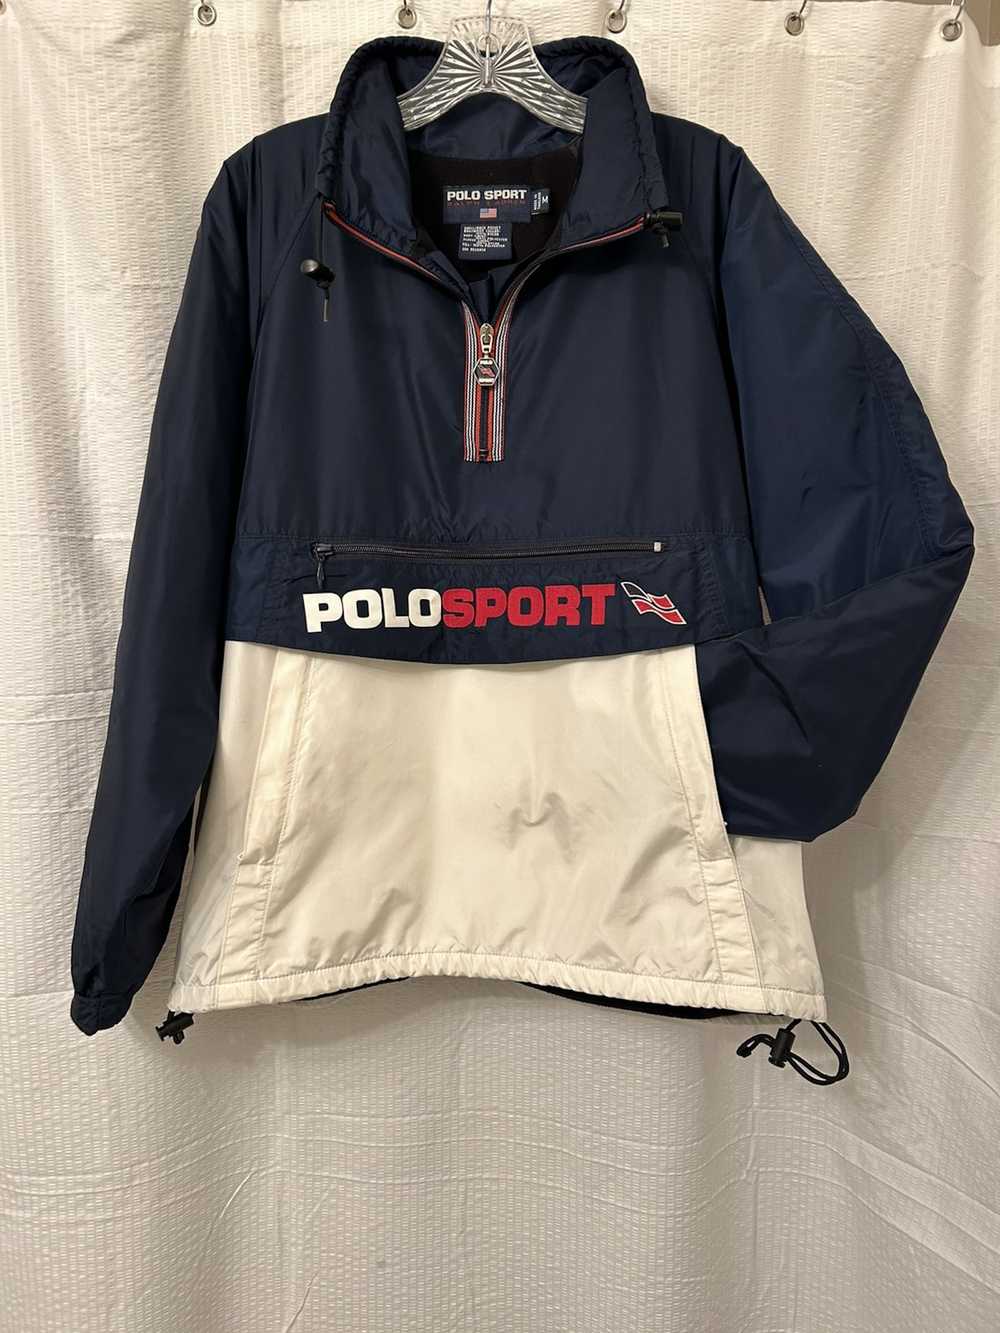 Polo Ralph Lauren 90’s Vintage Polo Sport pullove… - image 1